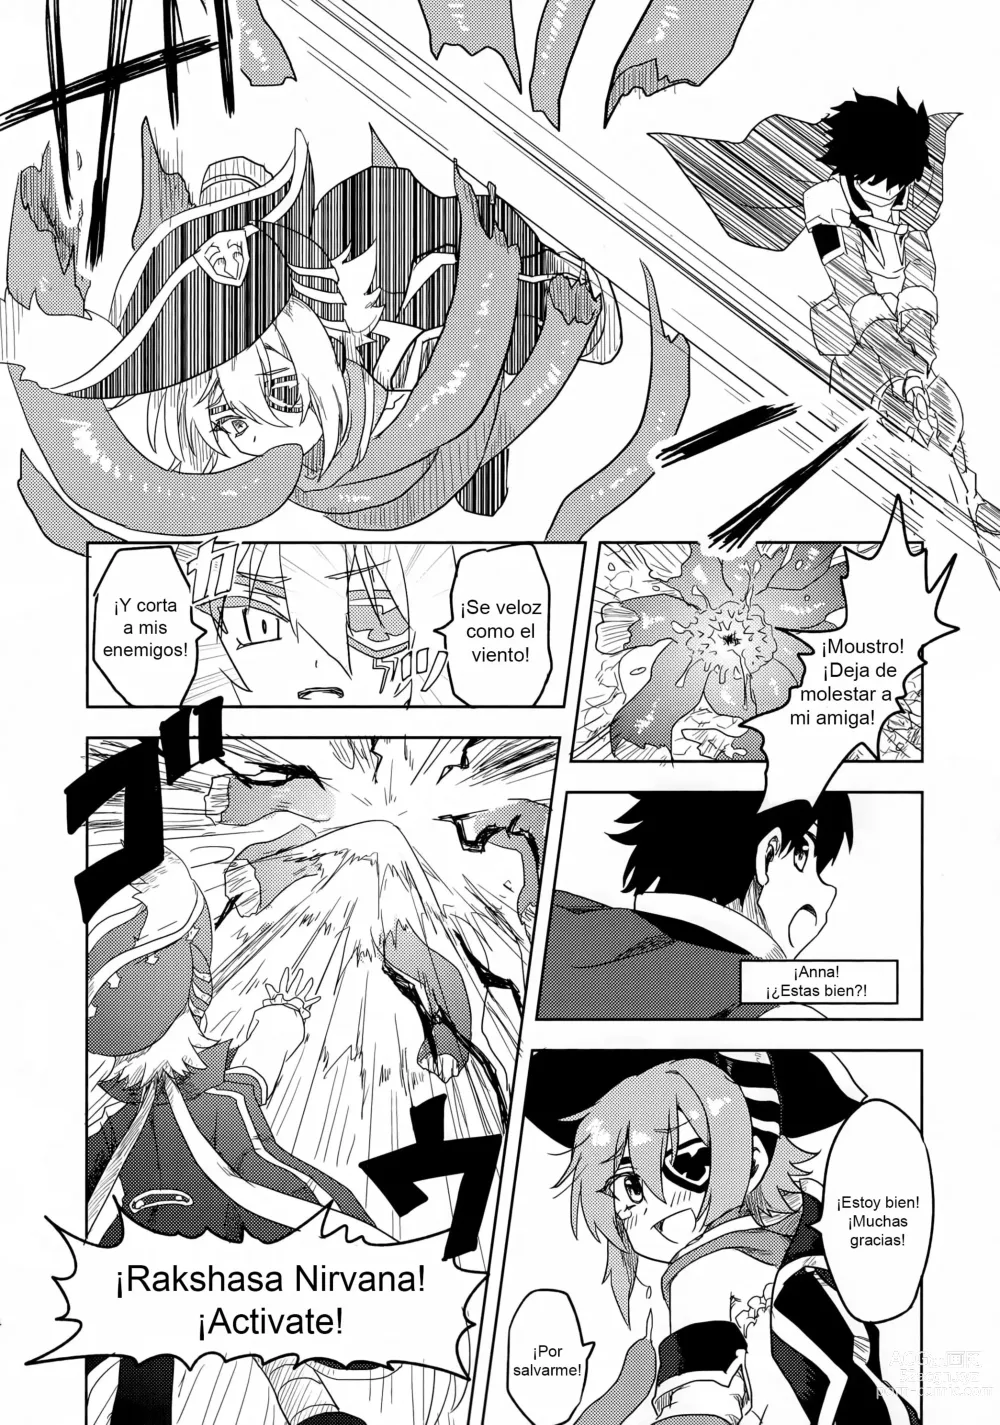 Page 11 of doujinshi Anna-chan to Ero Trap Dungeon